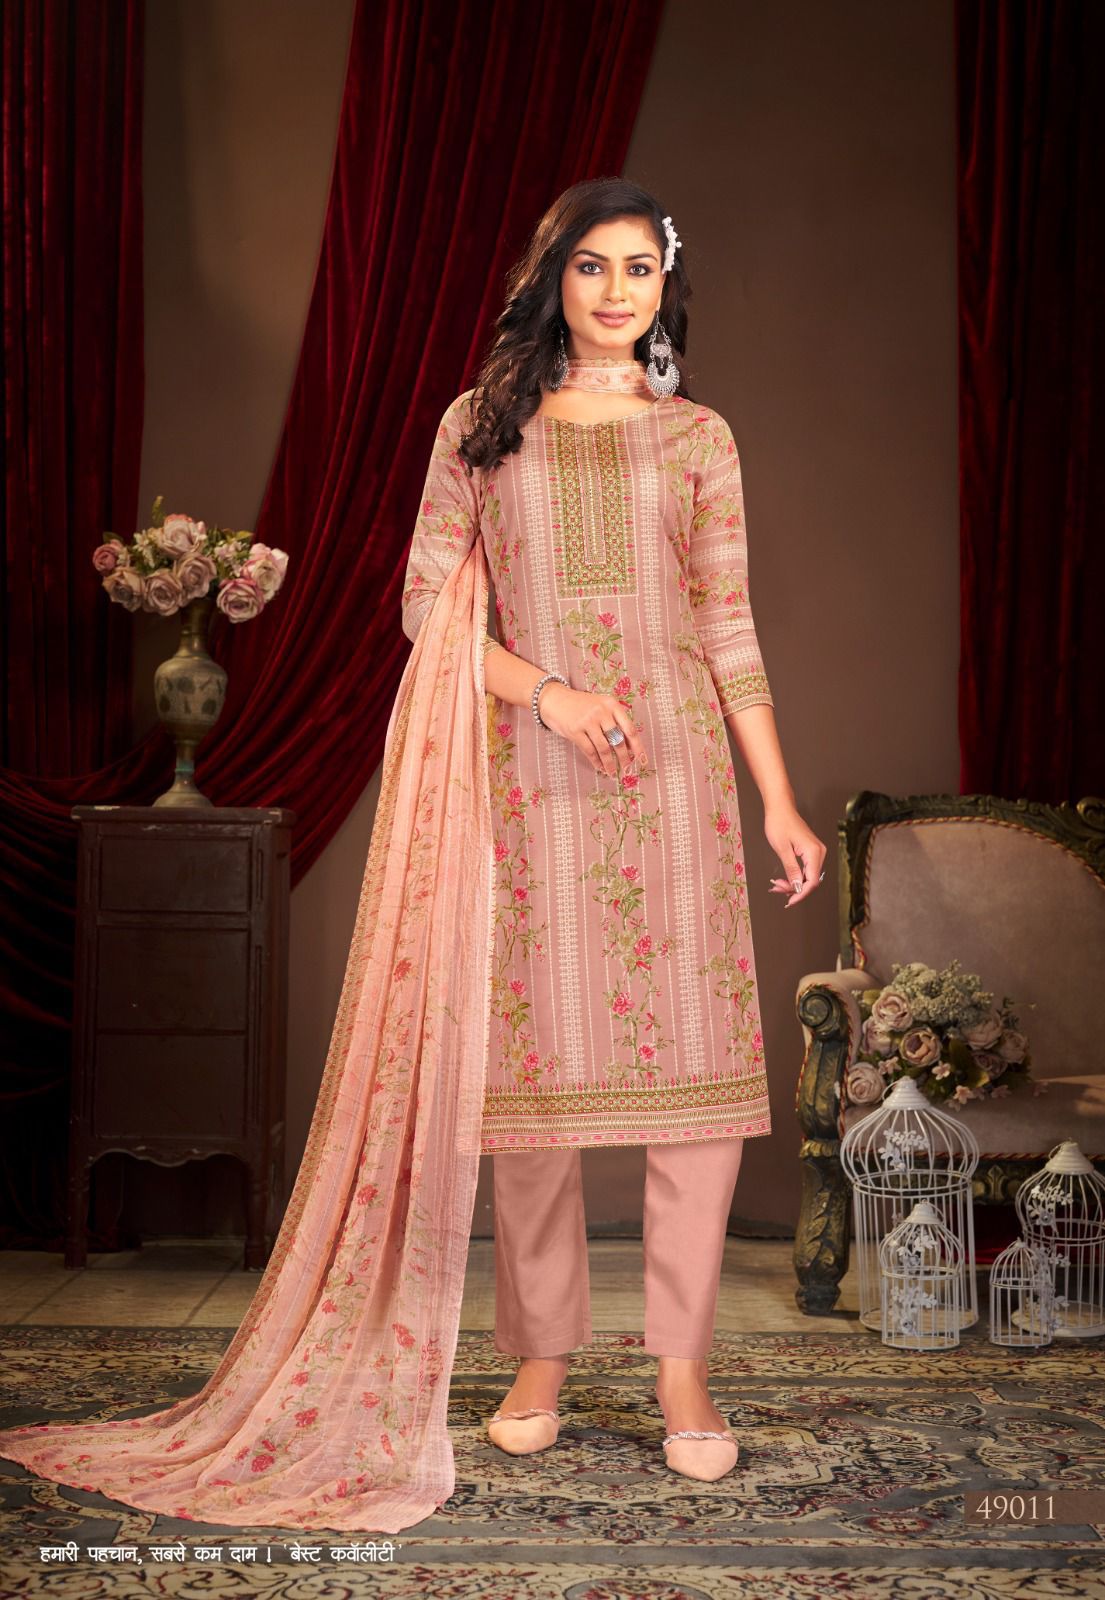 Punjabi Kudi Vol 49 Shiv Gori Silk Mills Cotton Pant Style Suits